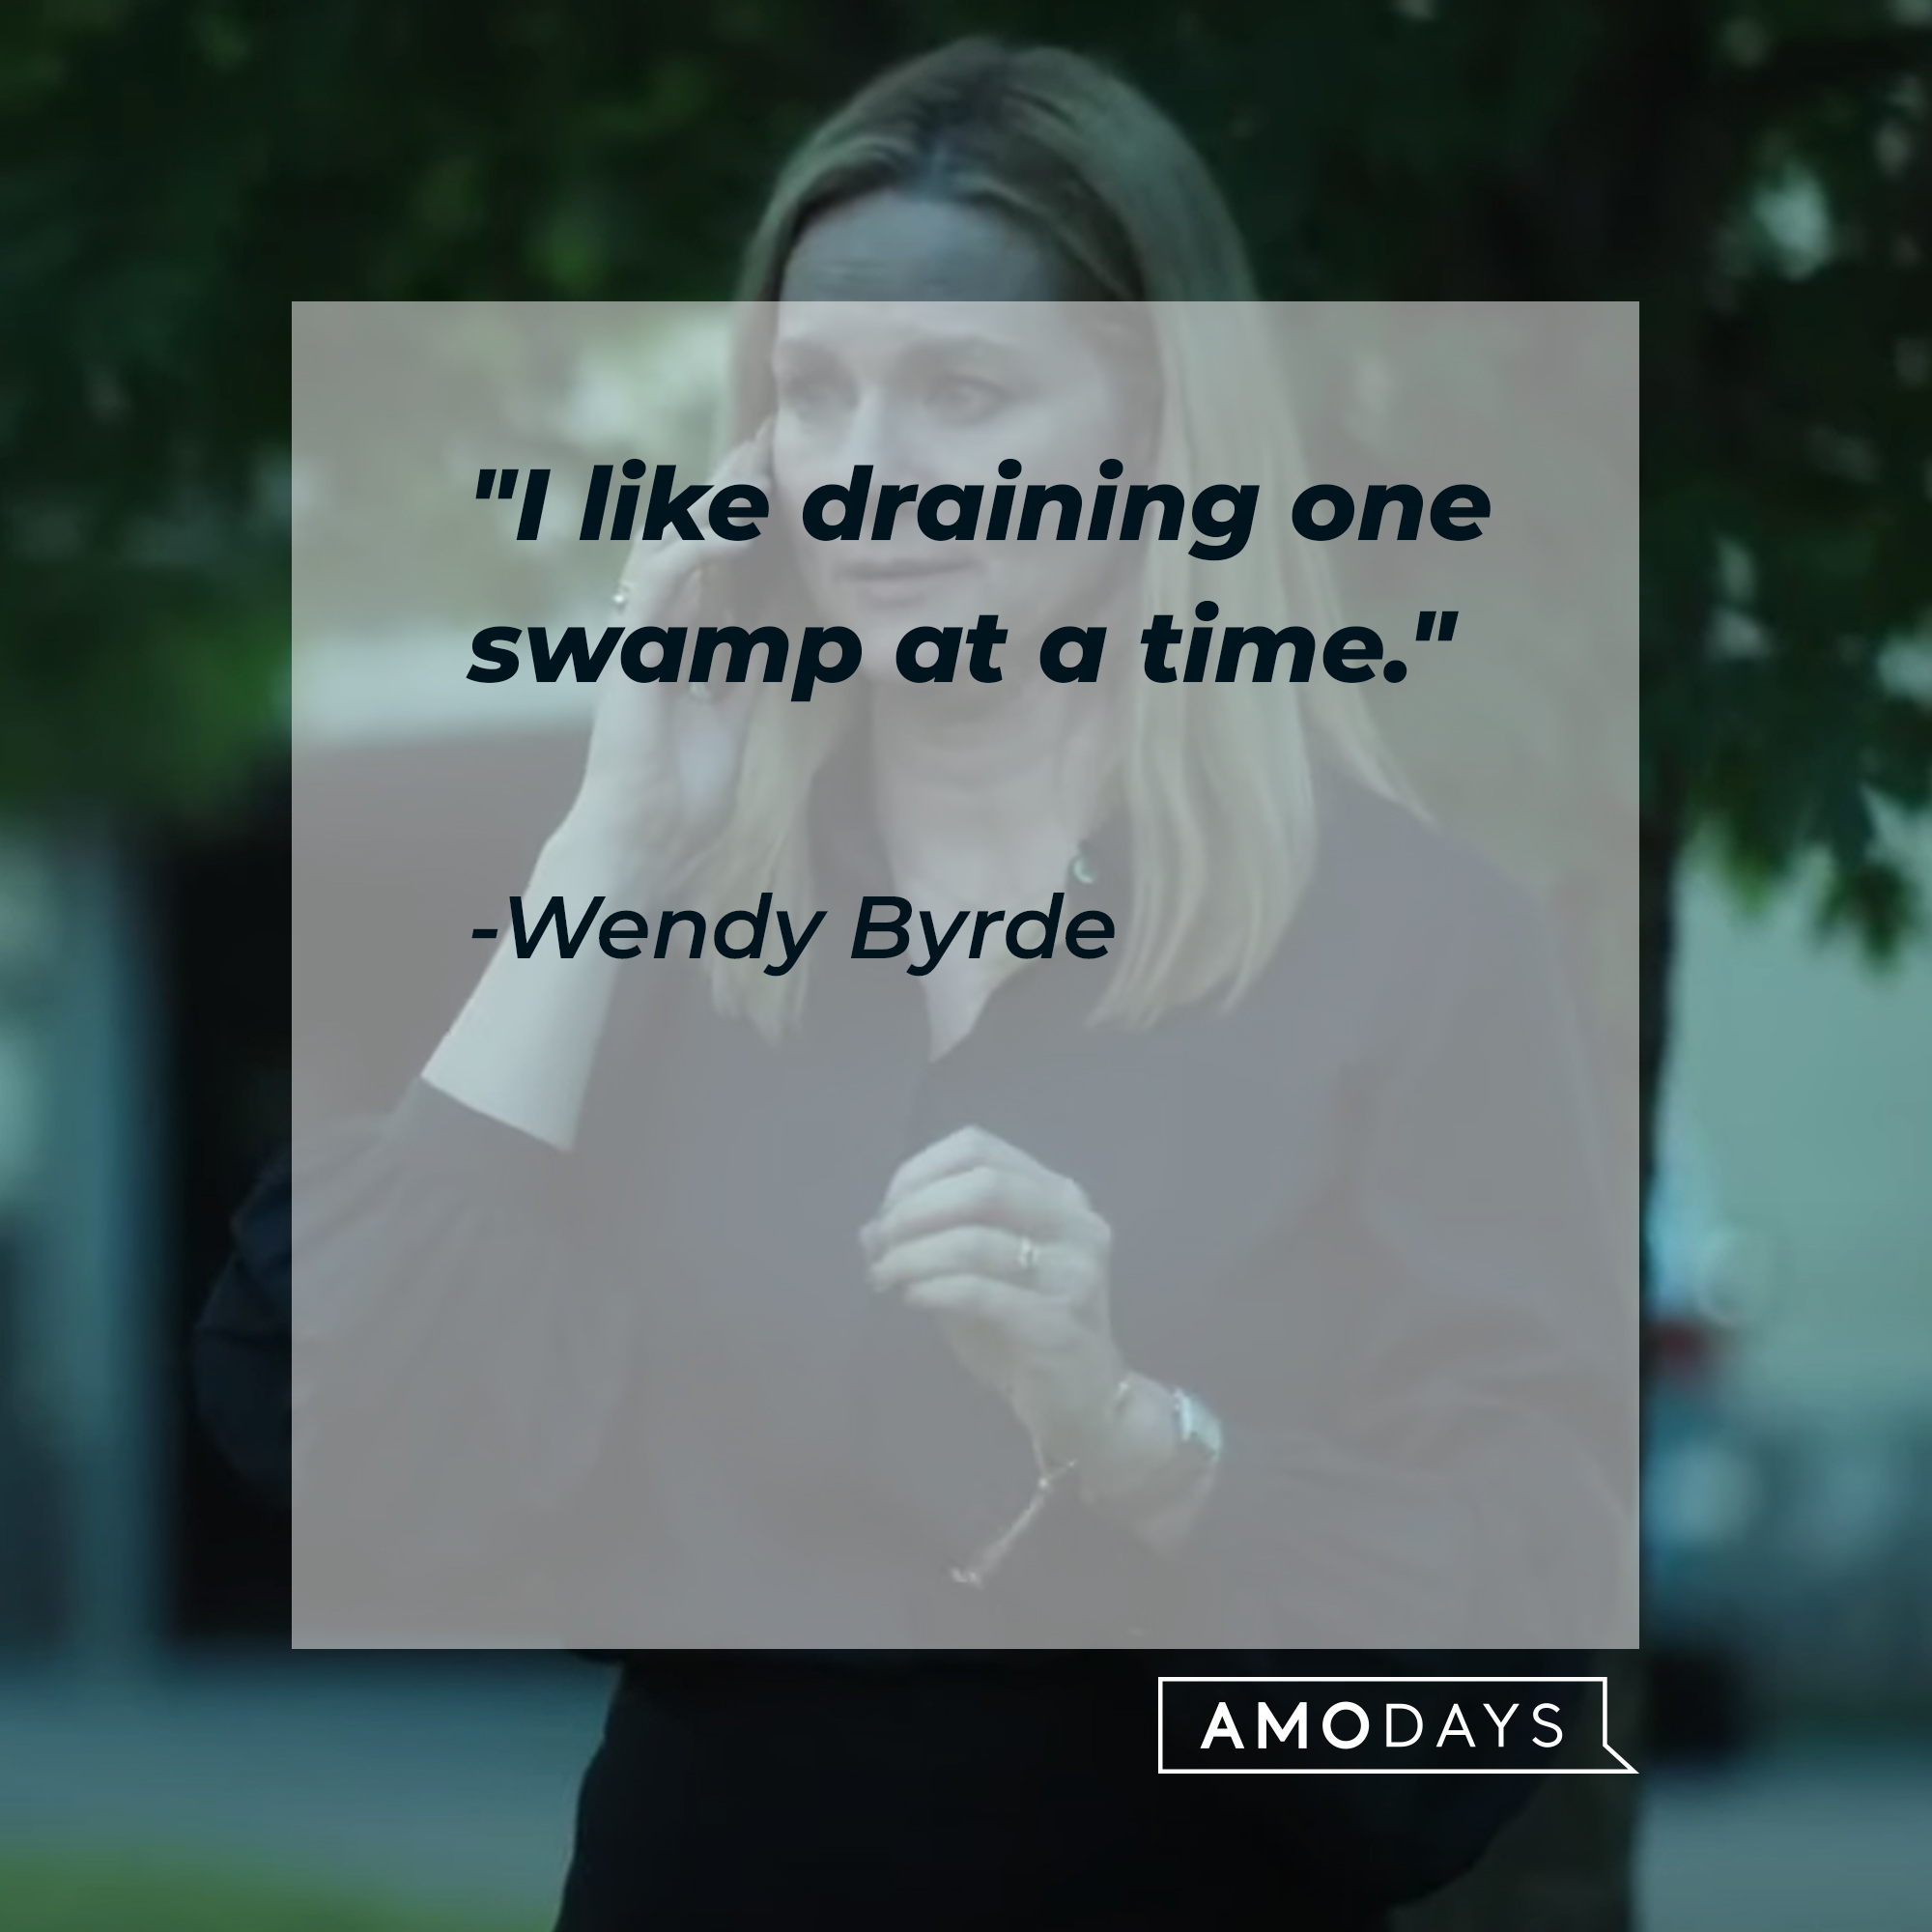 Wendy Byrde’s quote: “I like draining one swamp at a time.” | Source: facebook.com/OzarkNetflix